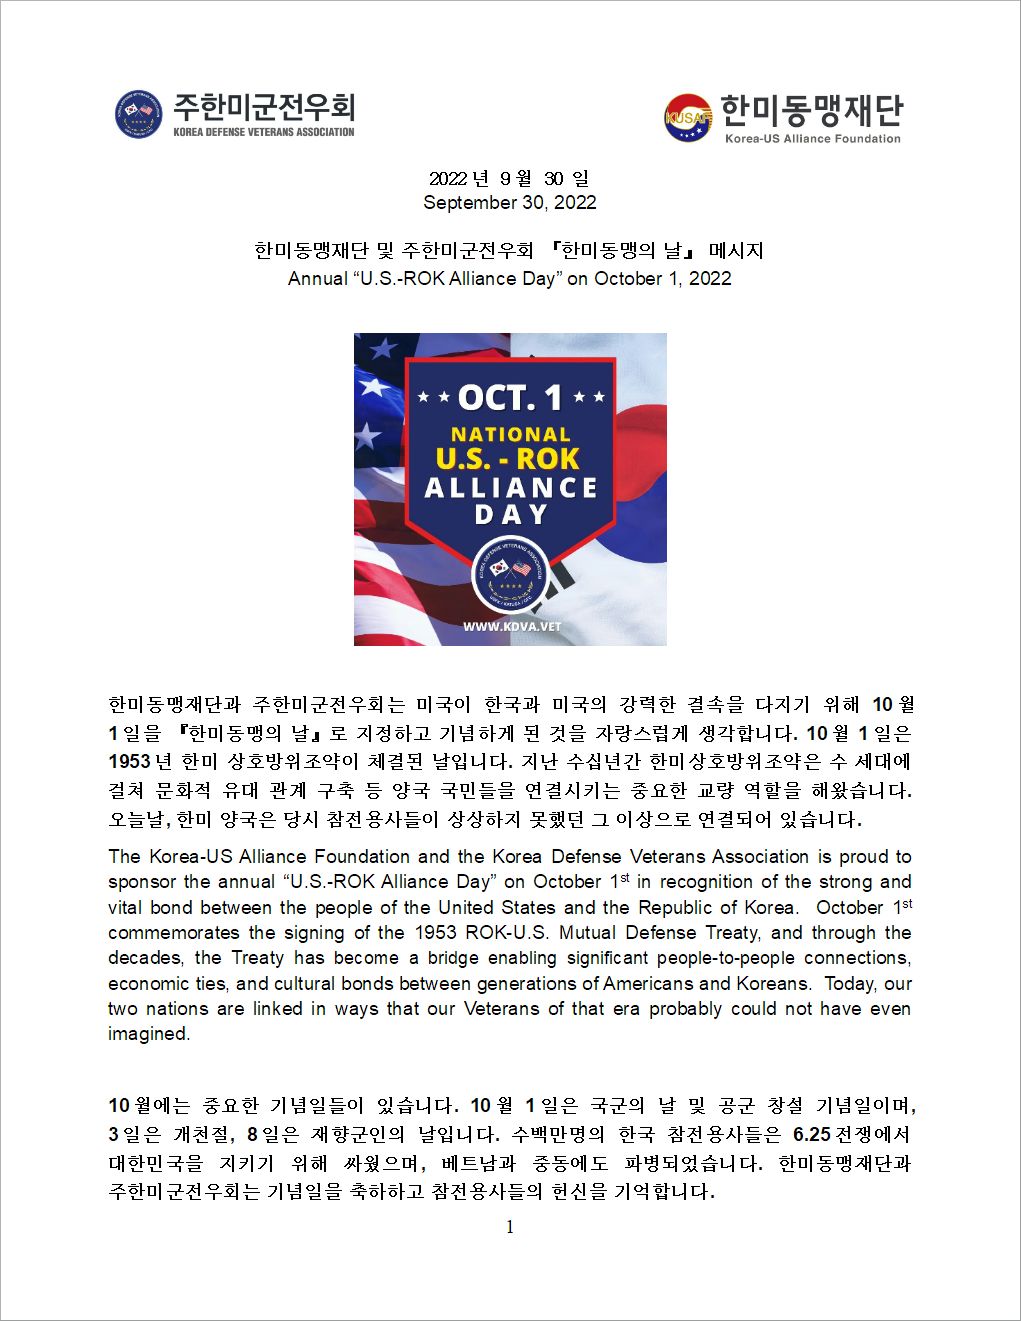 Press Release_KDVA and KUSAF for U.S.-ROK Alliance Day00001.jpeg